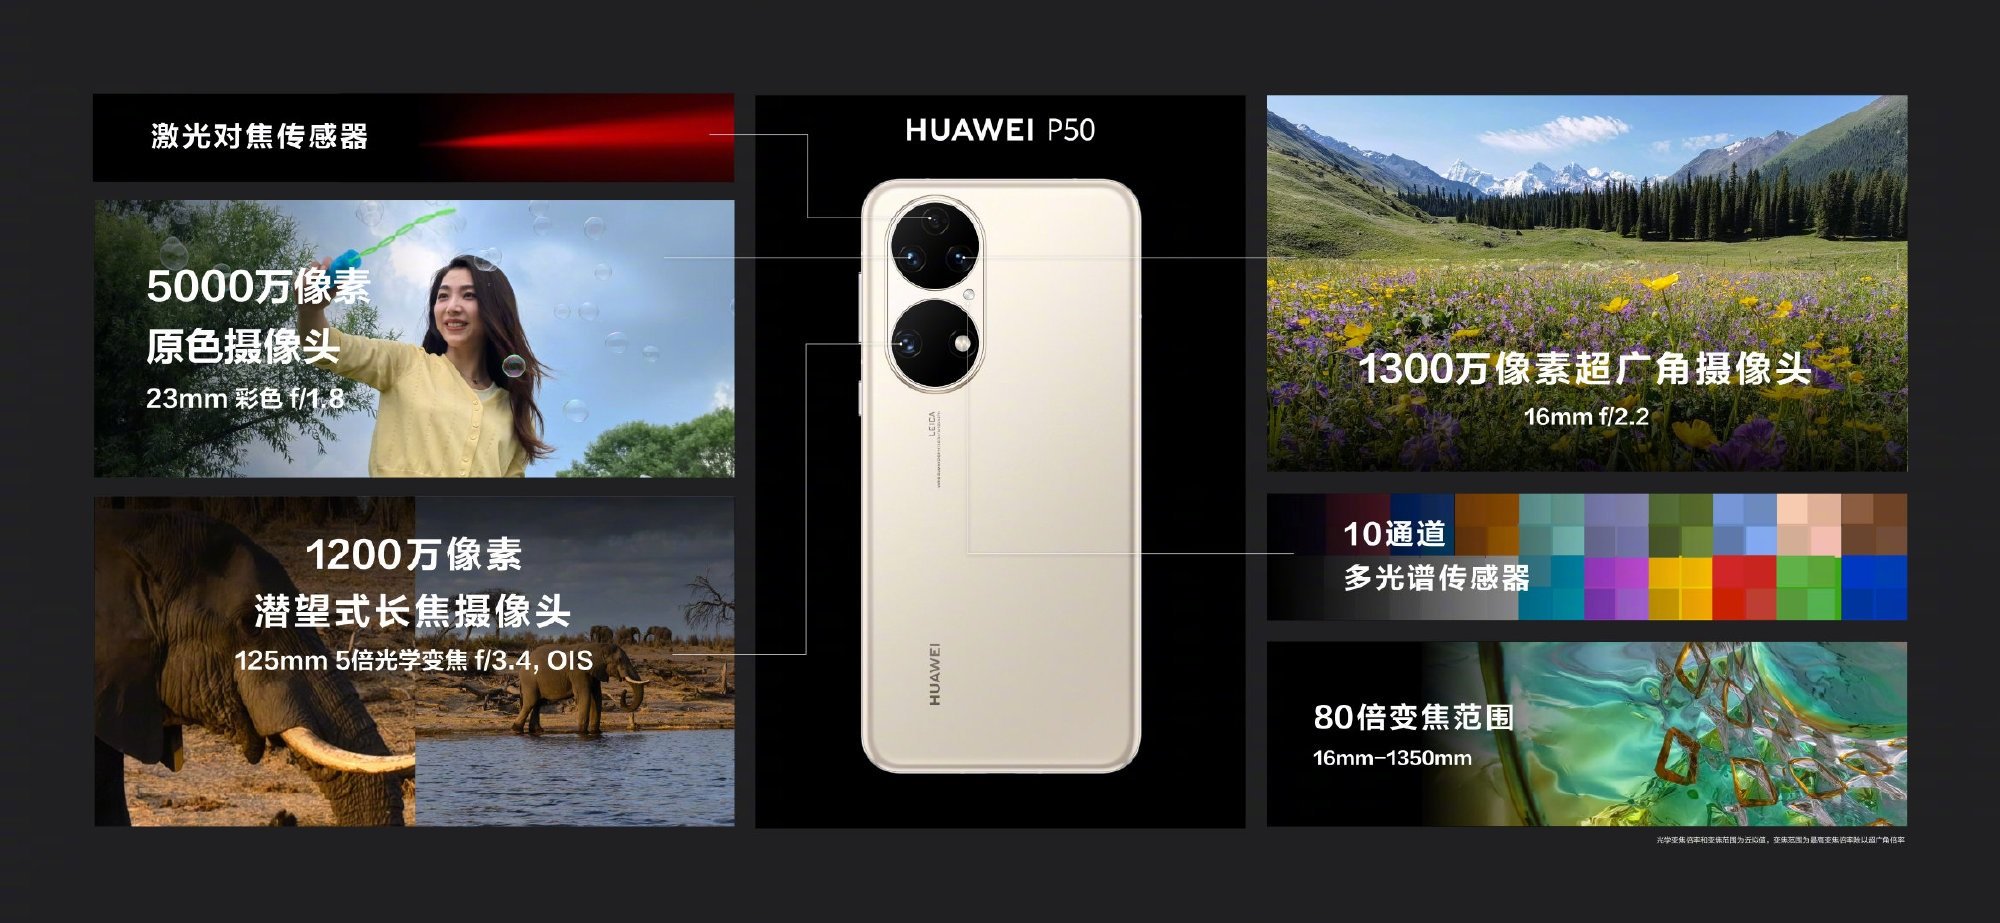 Huawei P50 camera b